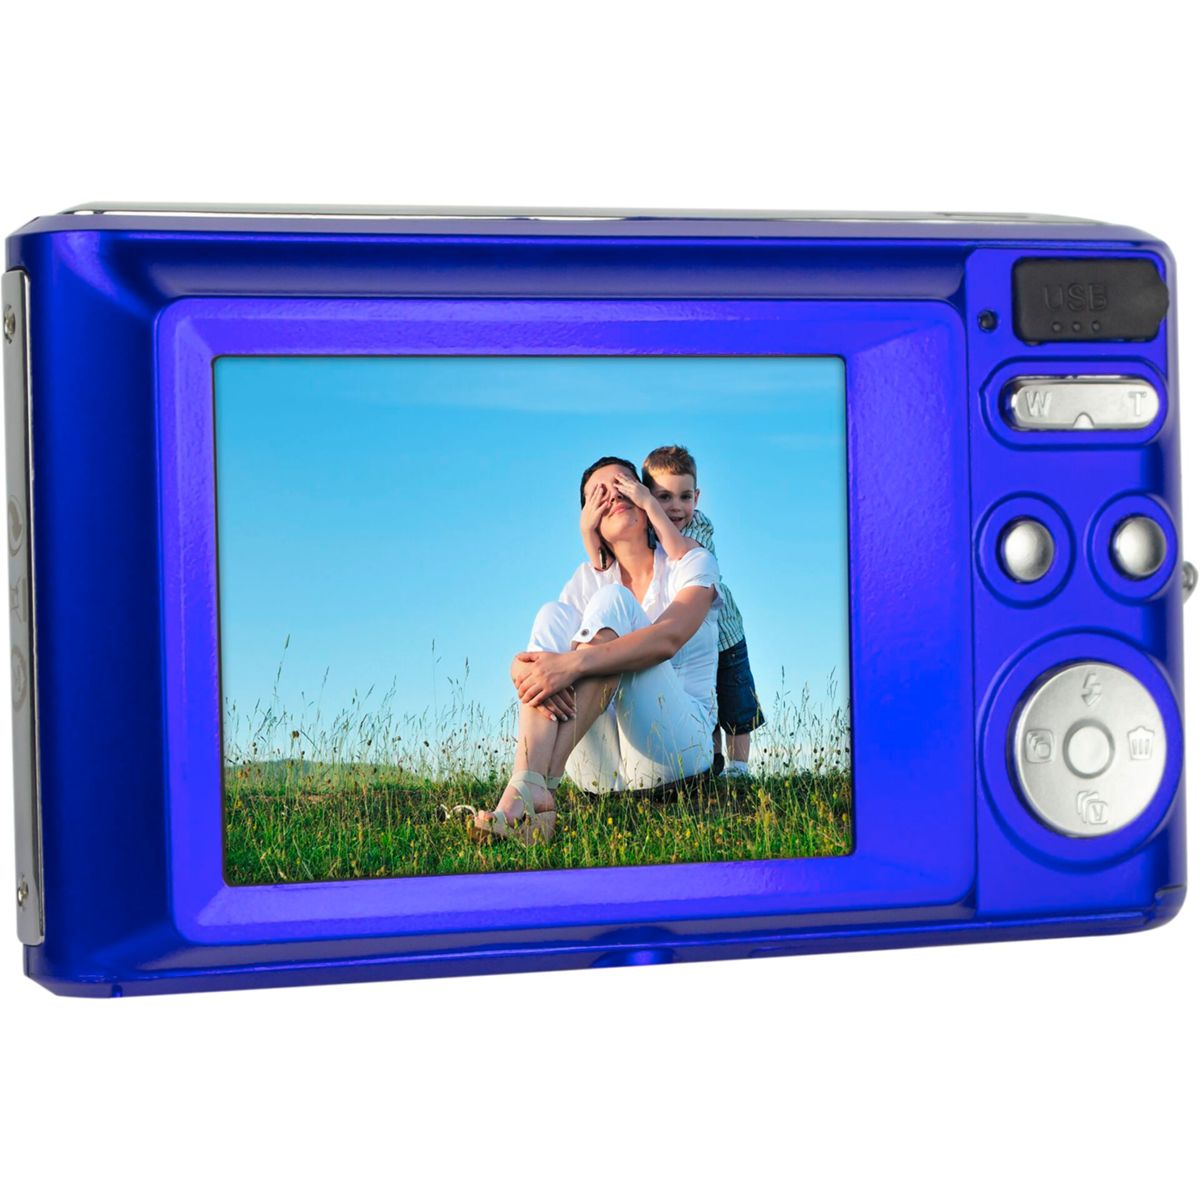 AGFAPHOTO blau- DC5200 Compact blau Cam Digitalkamera